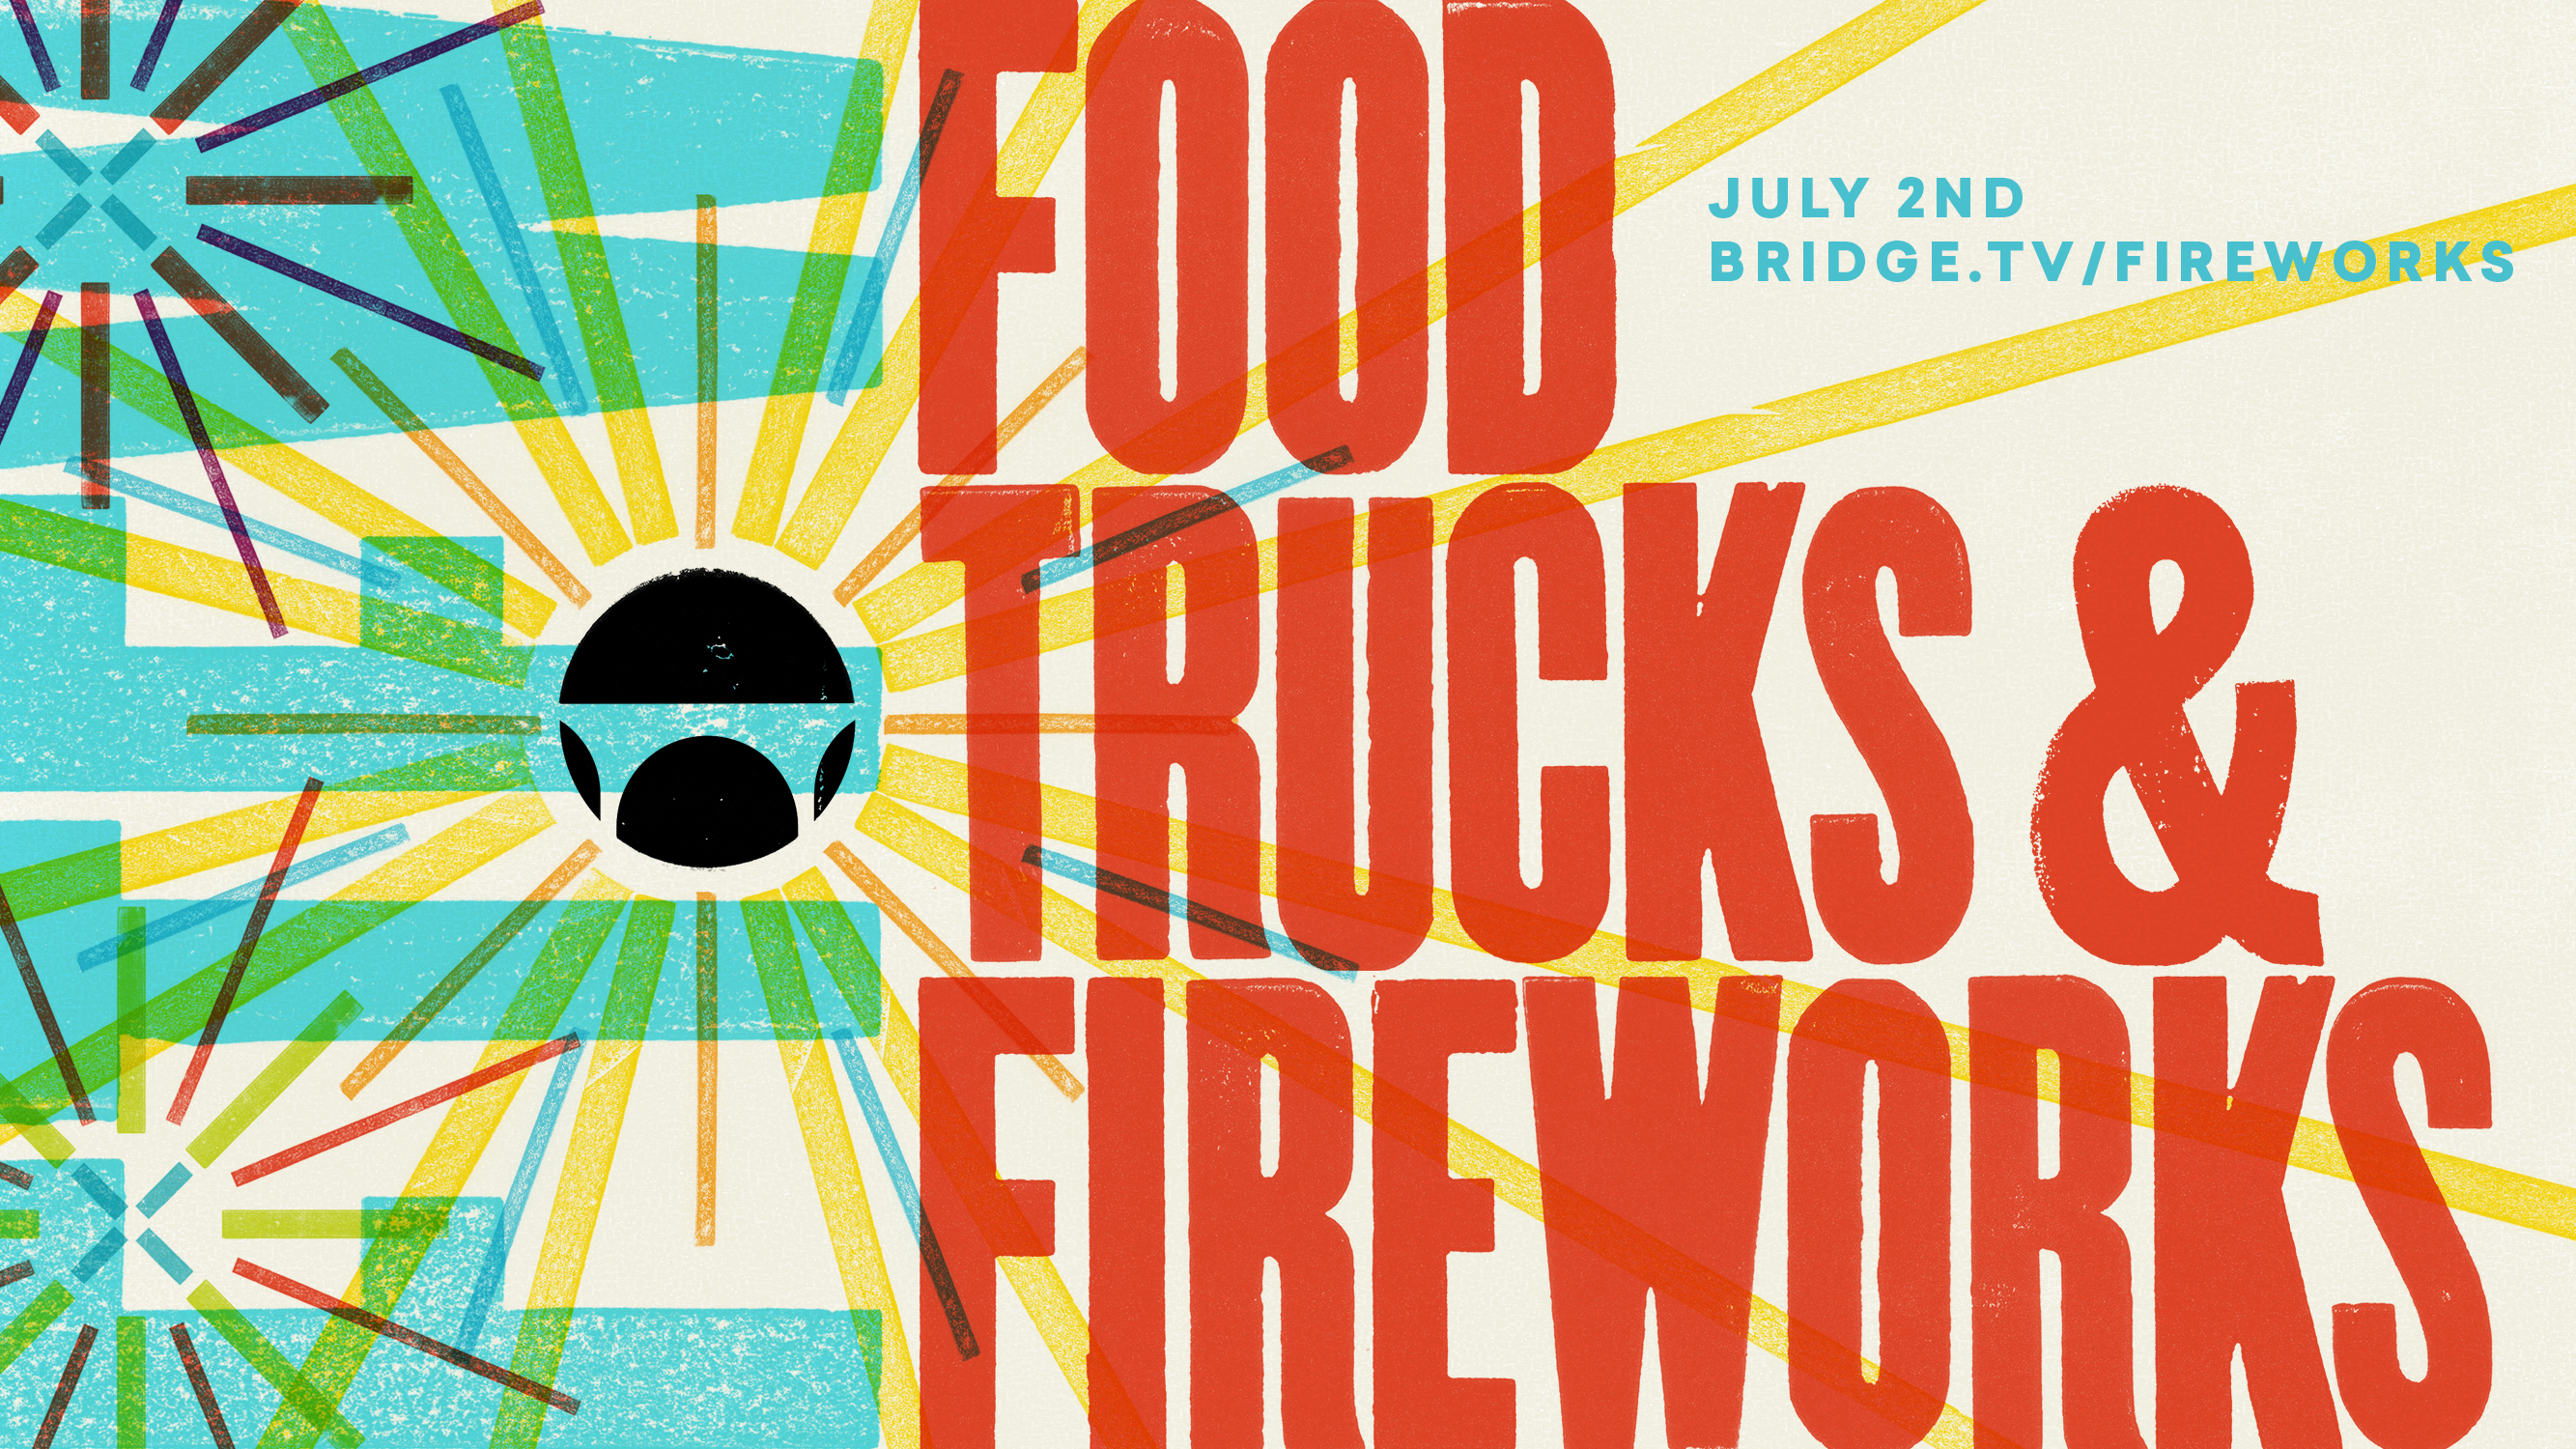 Food trucks and Fireworks